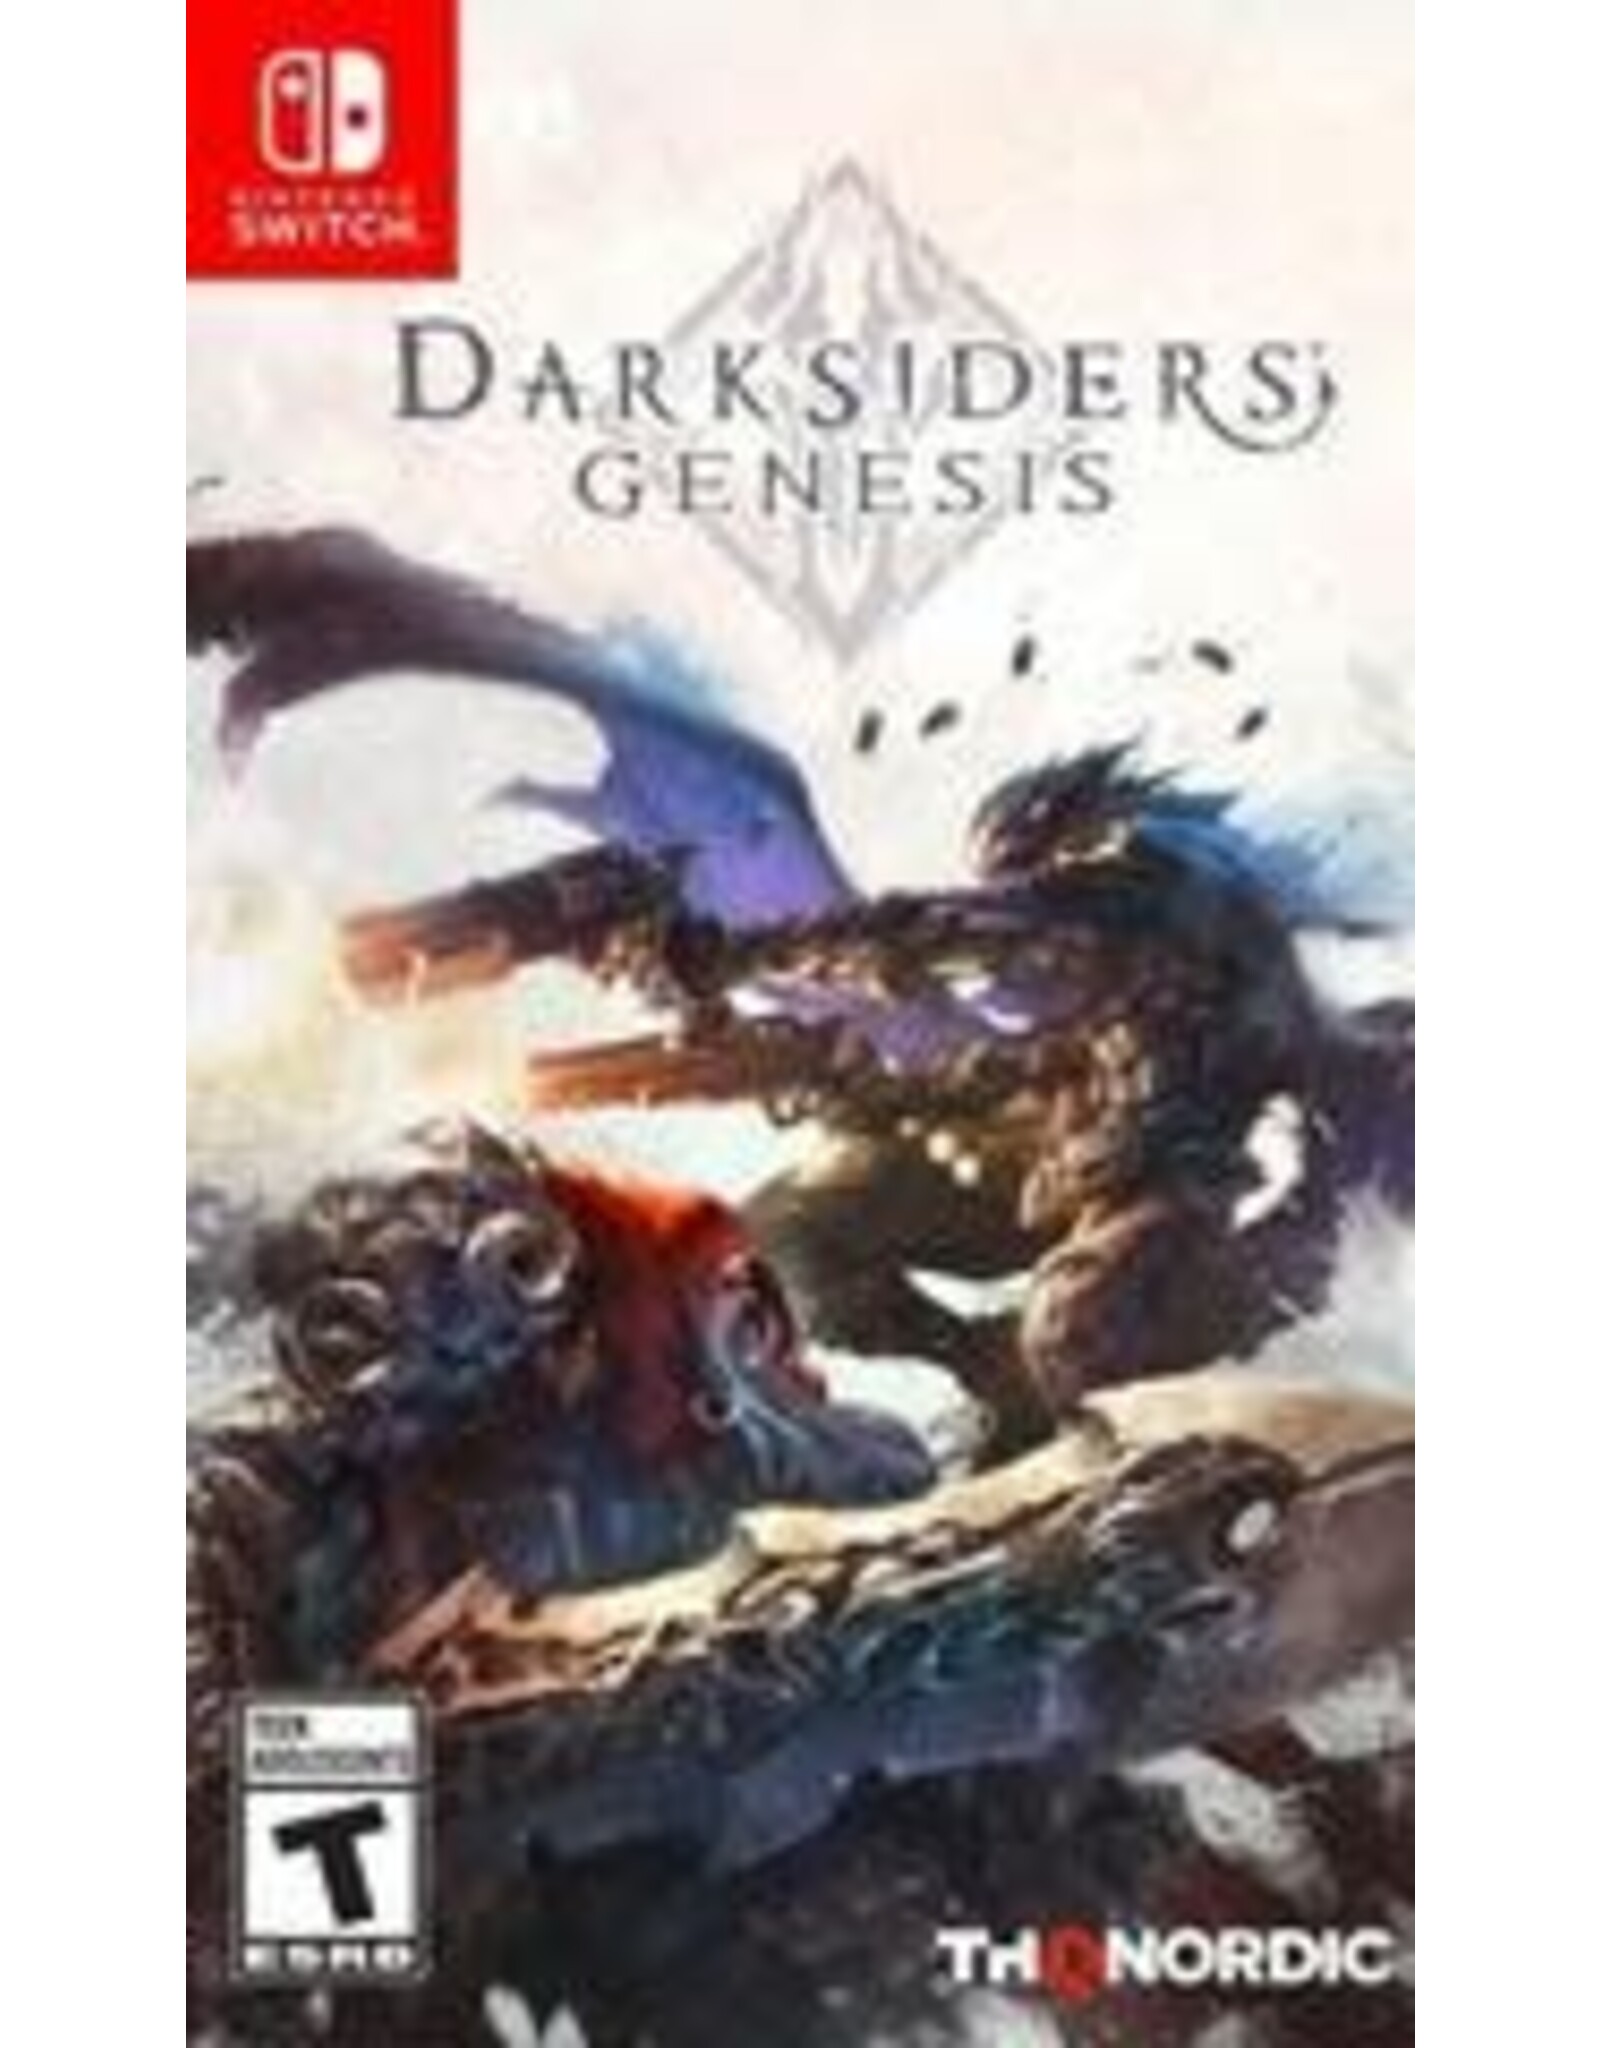 Used Game - Nintendo Switch - Darksiders Genesis [CIB]